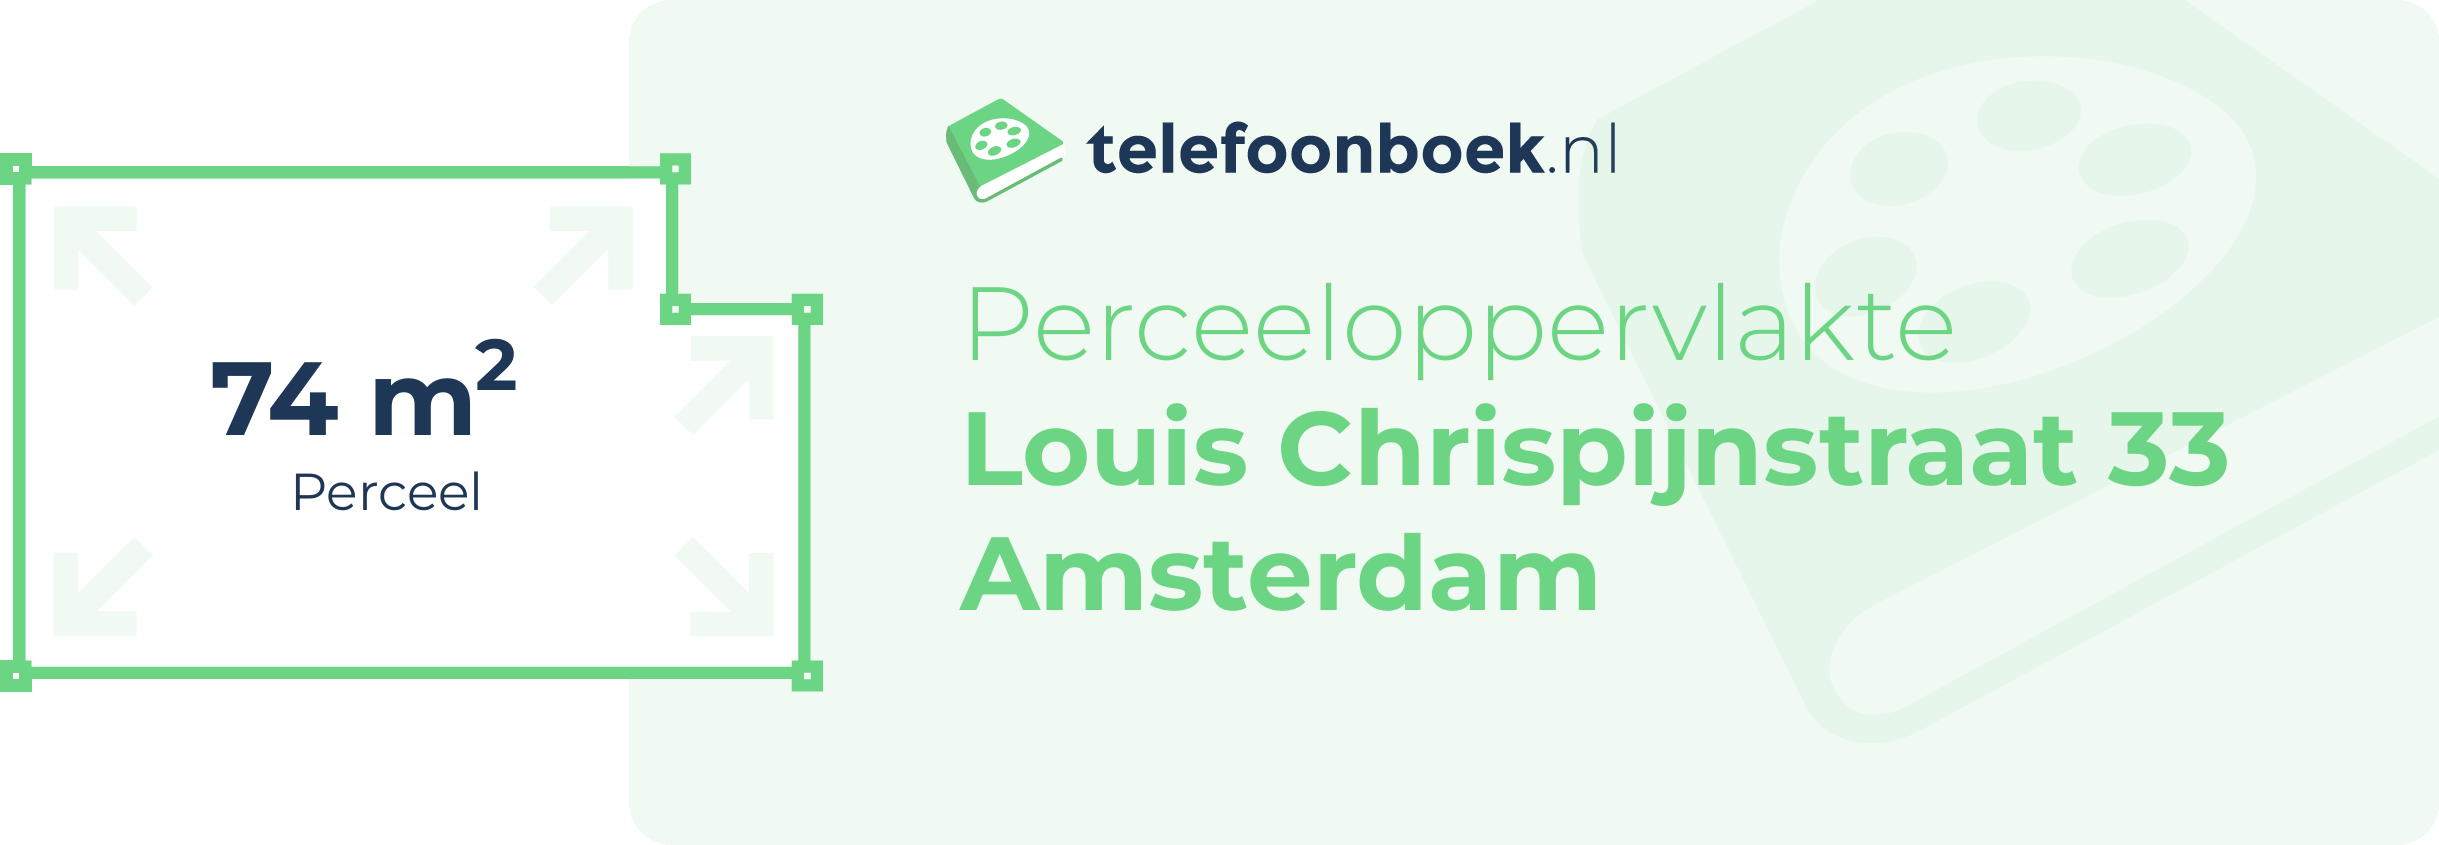 Perceeloppervlakte Louis Chrispijnstraat 33 Amsterdam